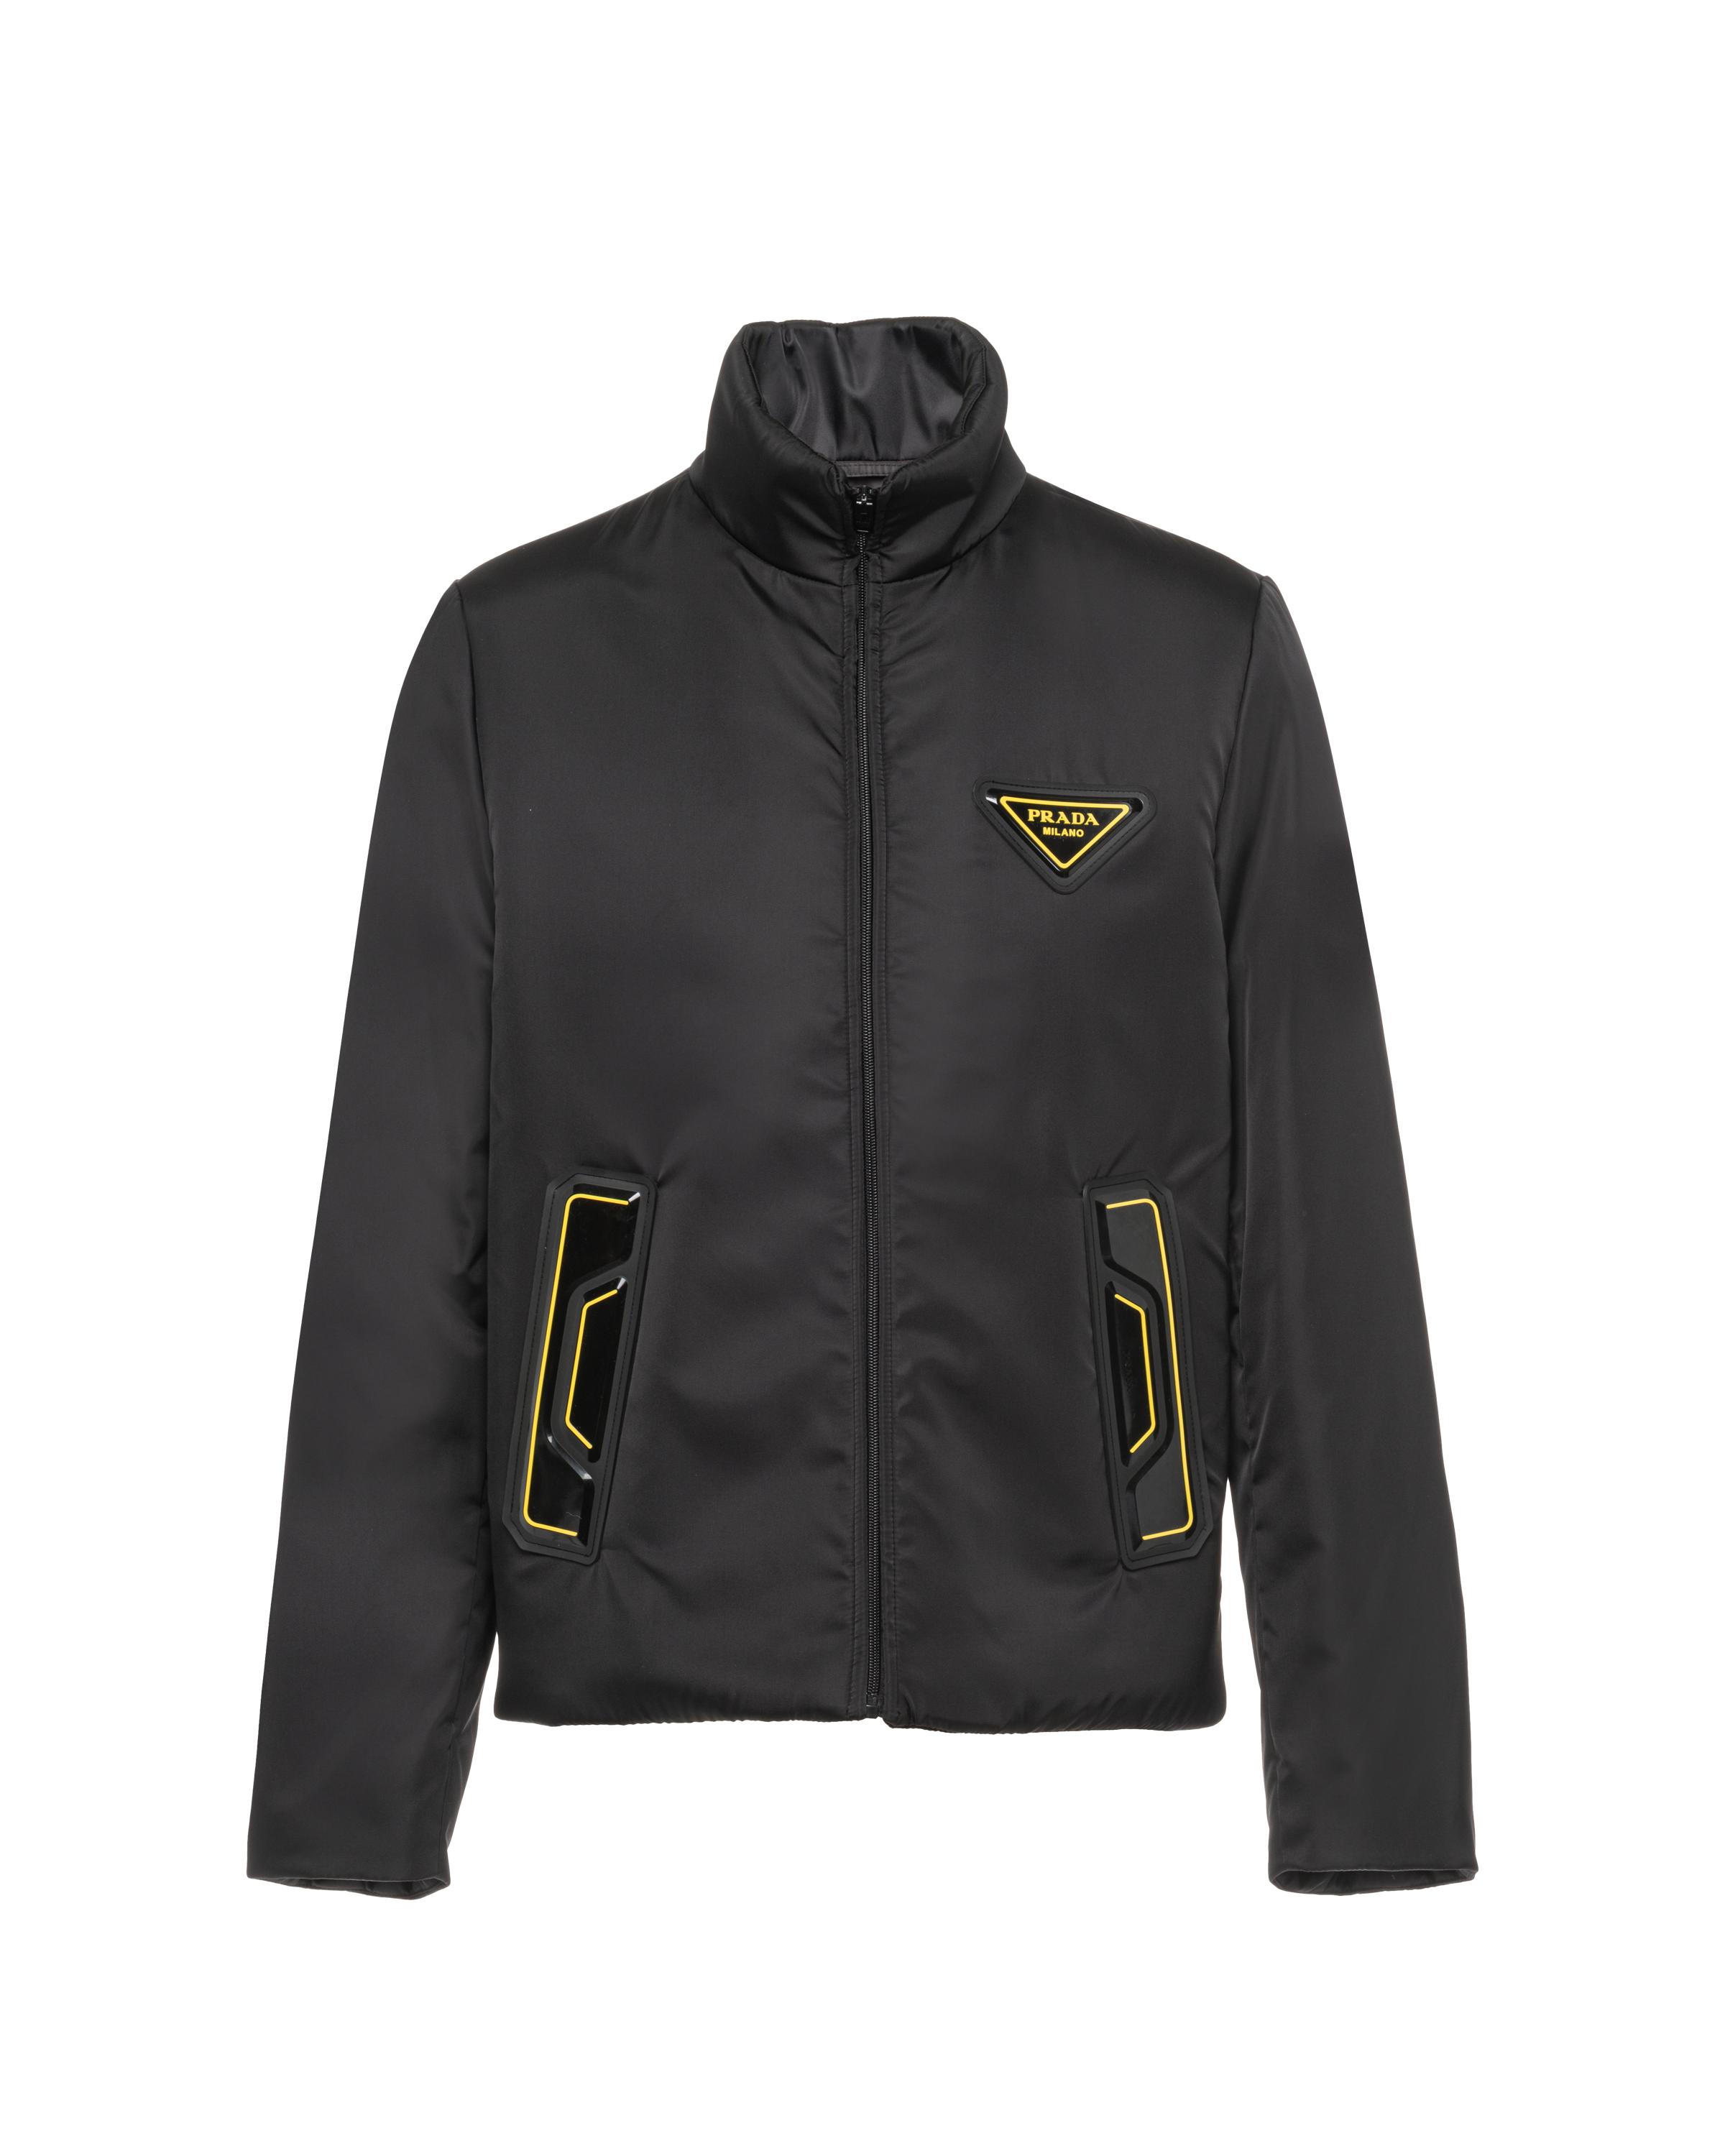 Prada Synthetic Re-nylon Blouson Jacket in Black for Men - Lyst